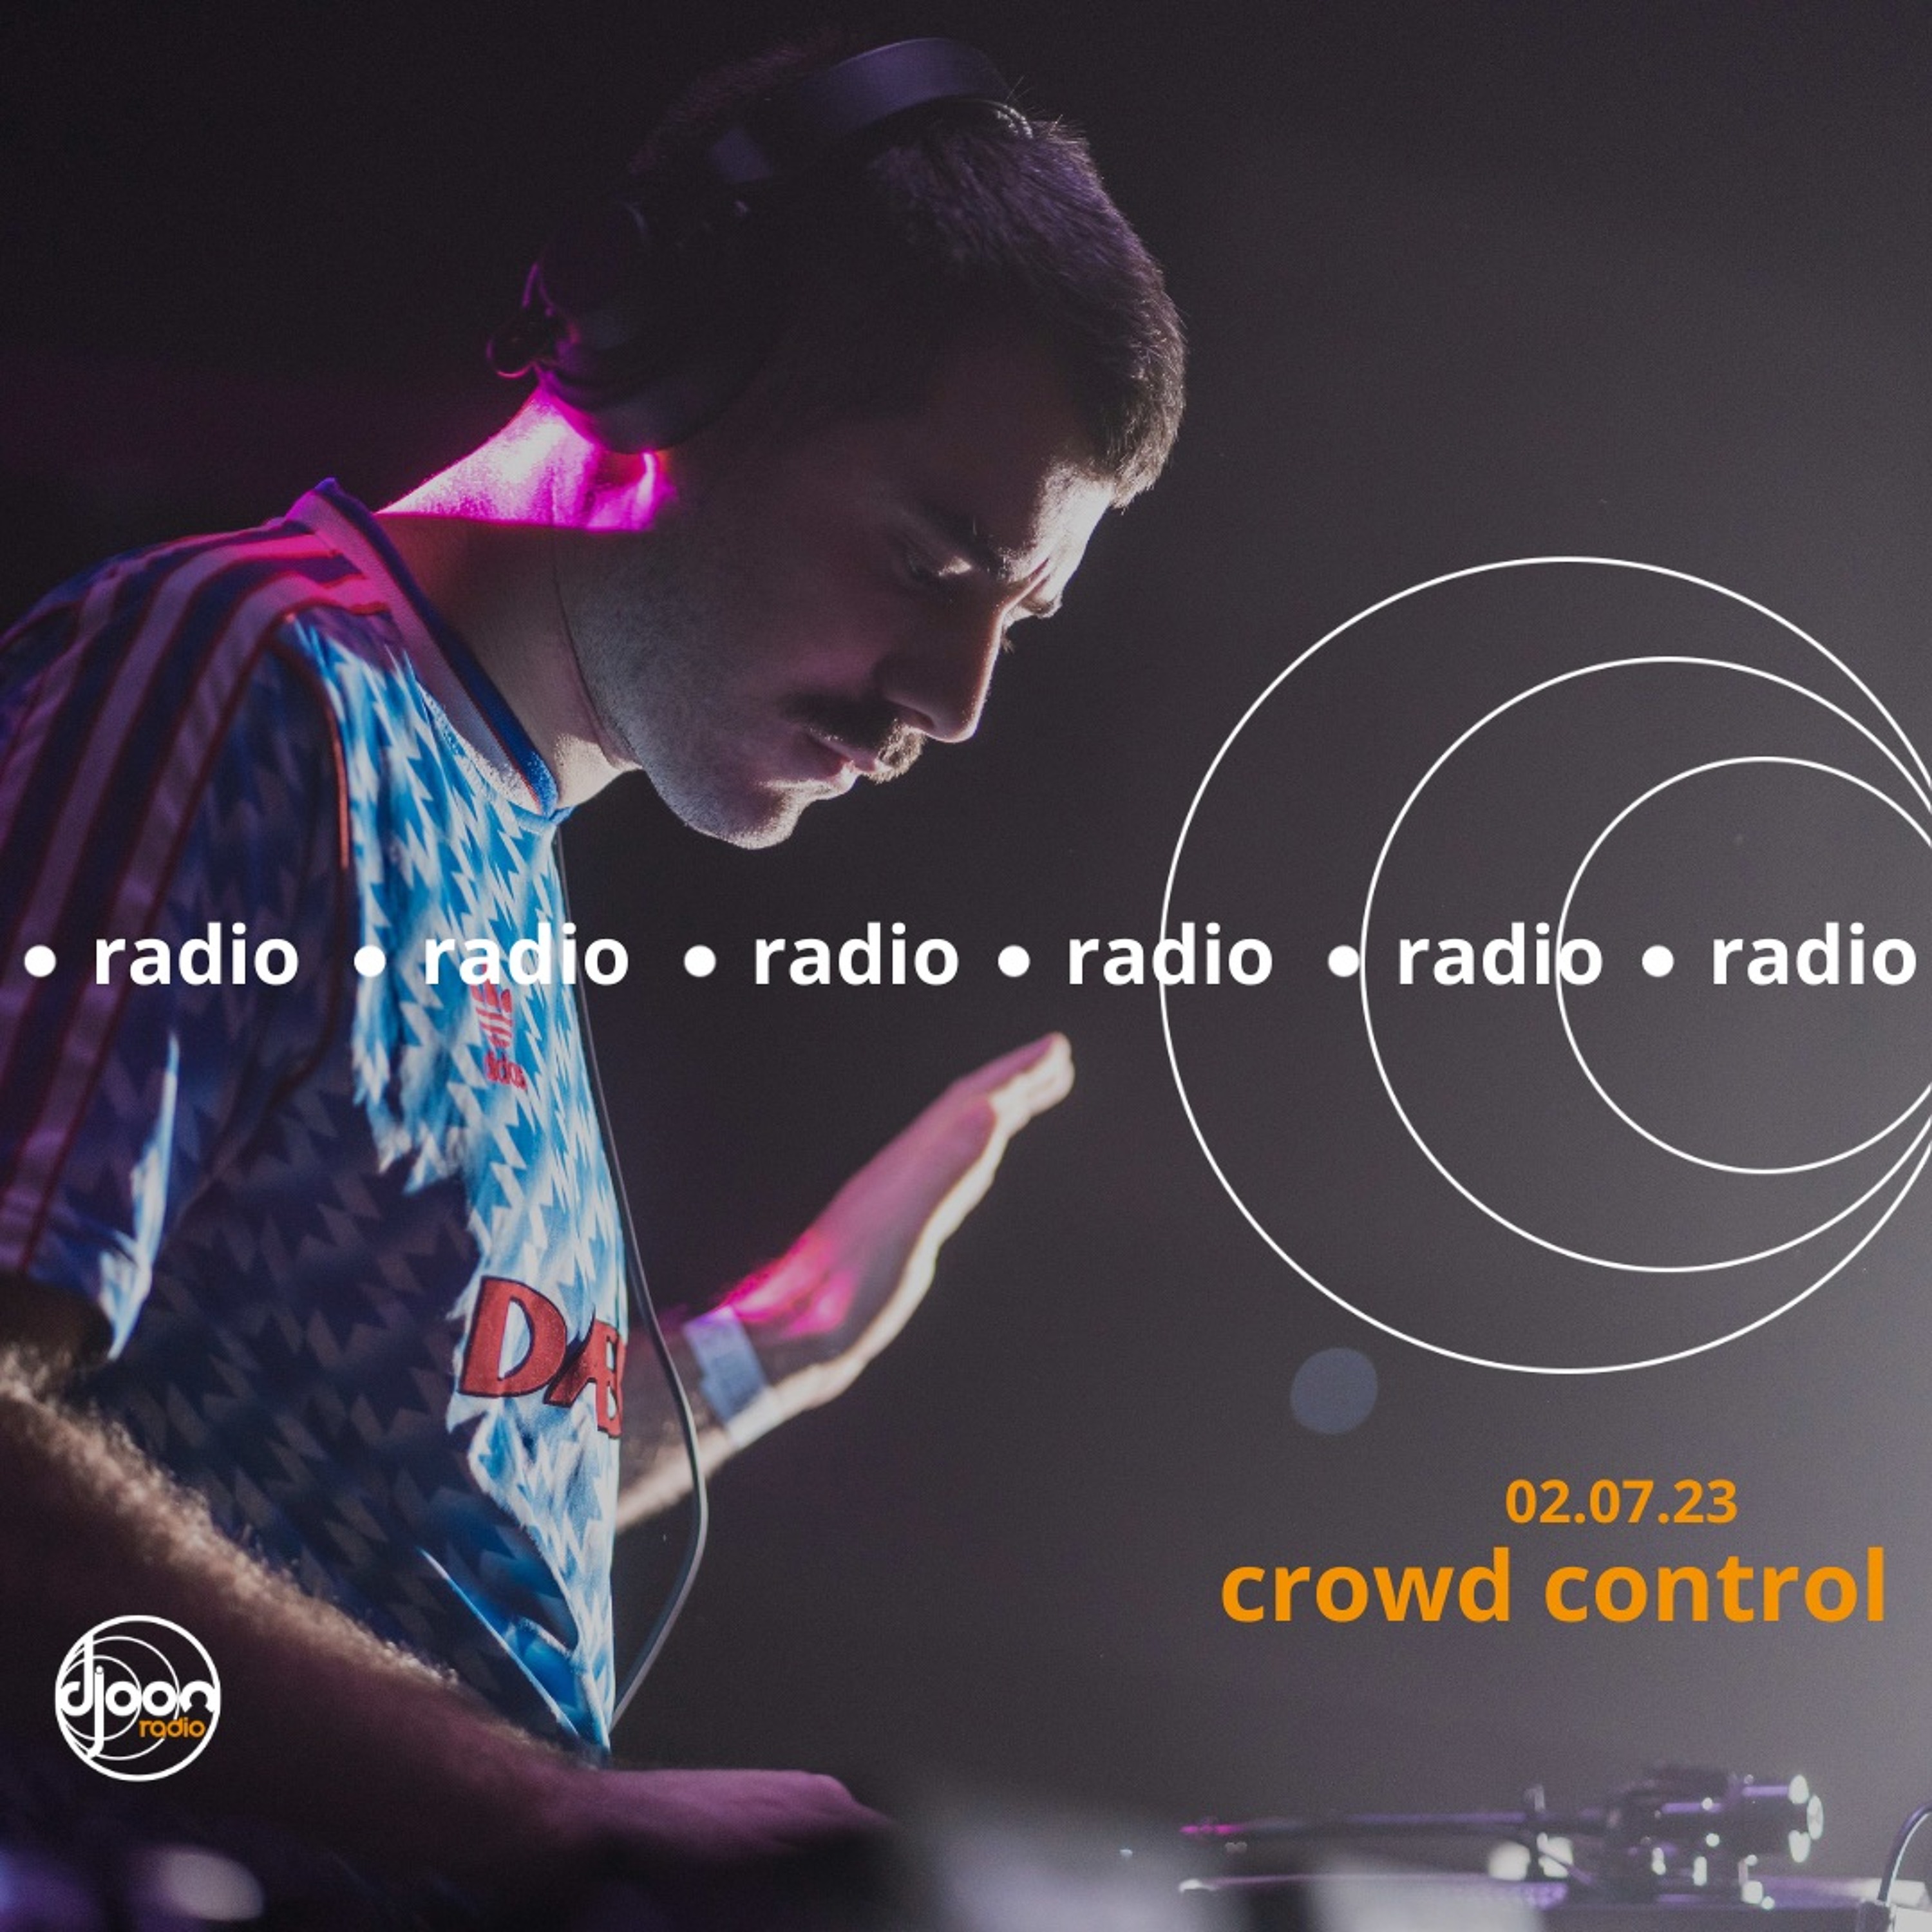 Crowd Control for Djoon Radio